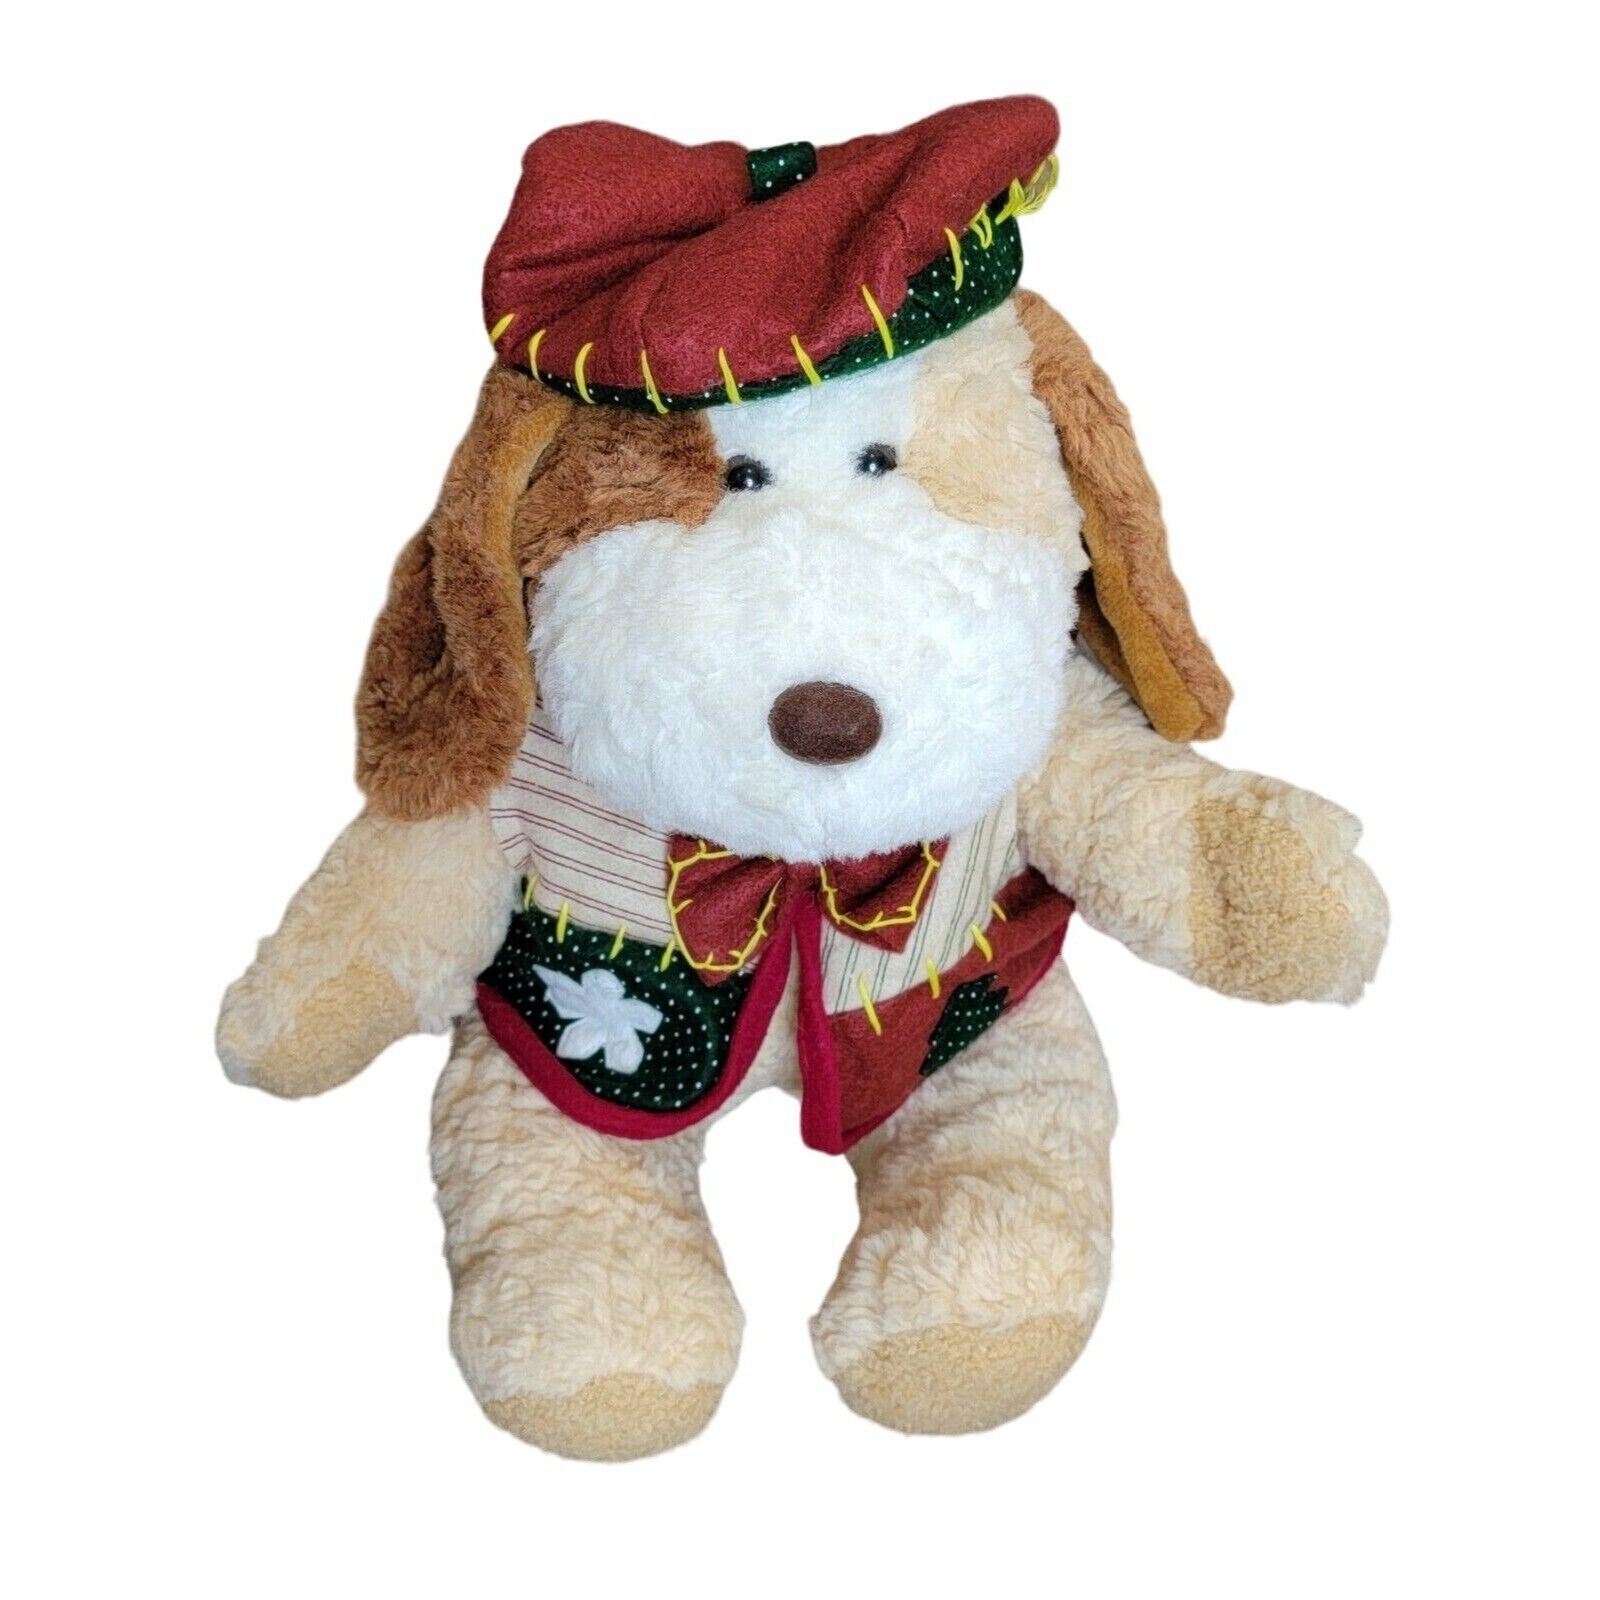 Vintage 1999 Holiday Friends Christmas Tan Dog Plush Stuffed Animal Toy 18